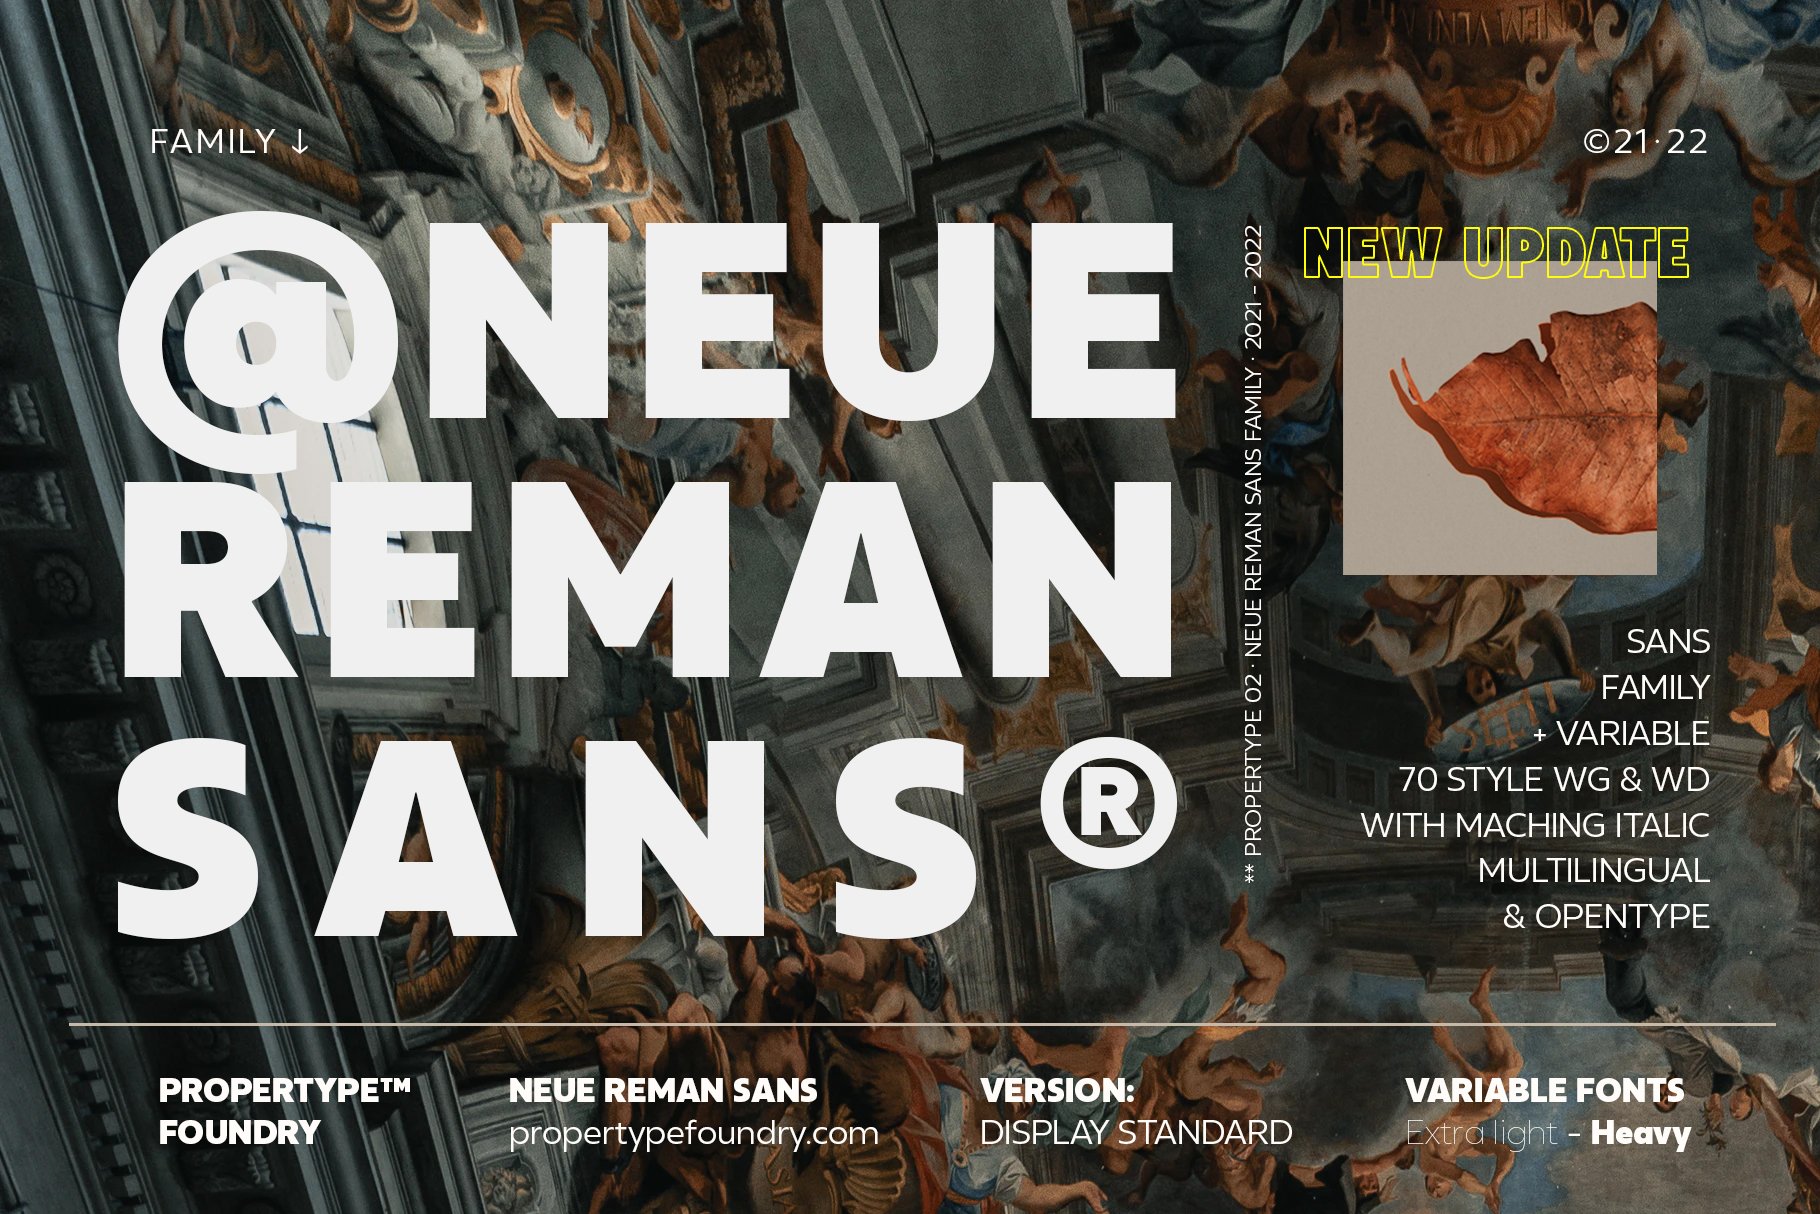 Neue Reman Sans Family cover image.